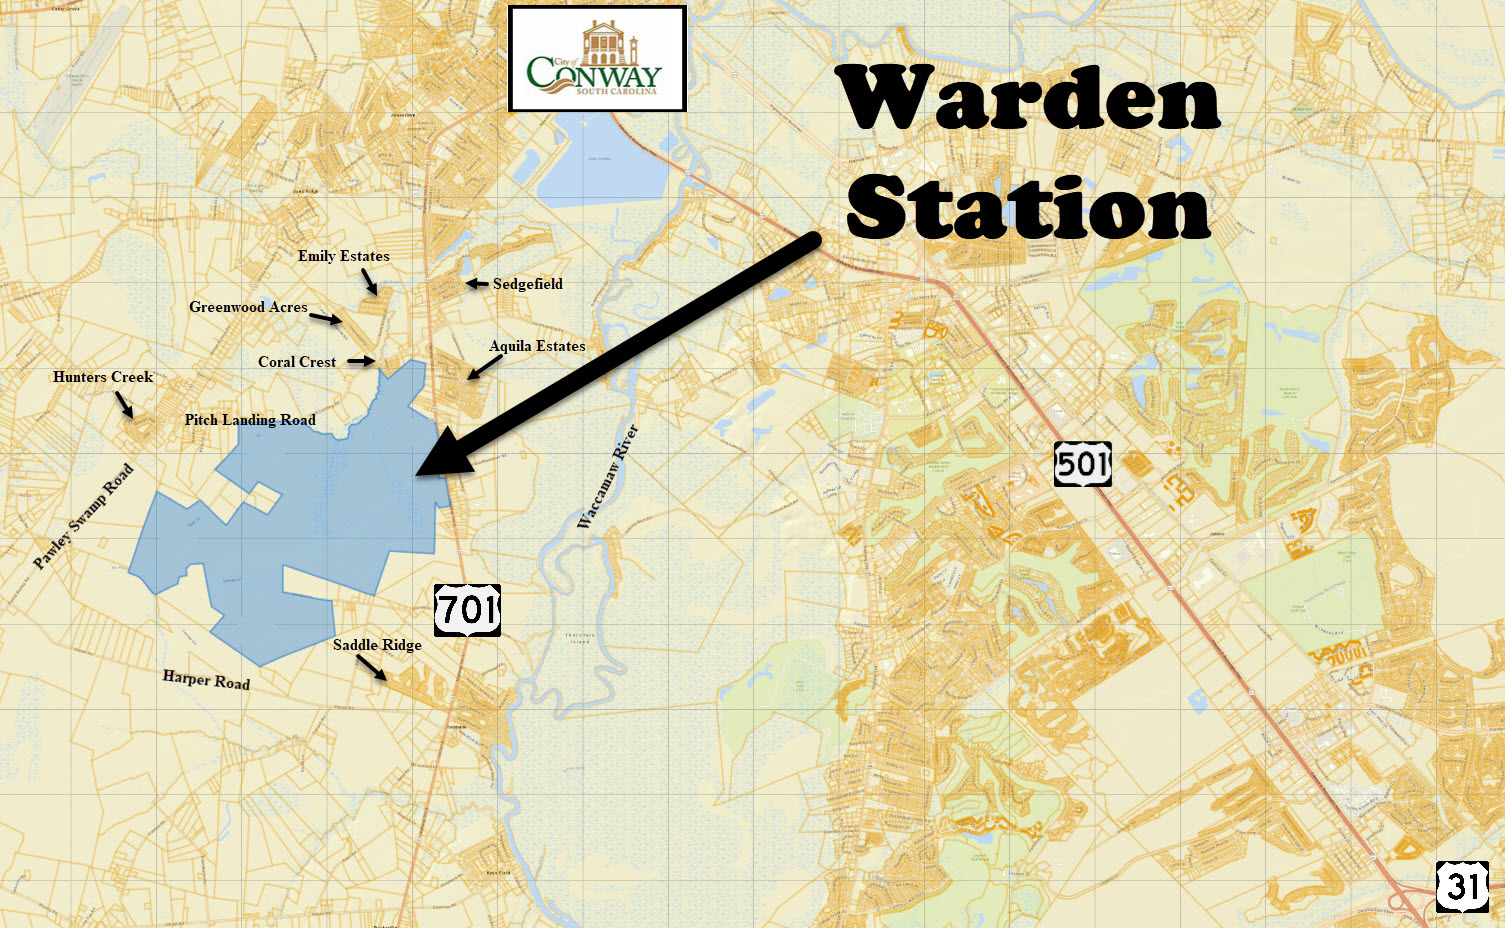 Warden Station